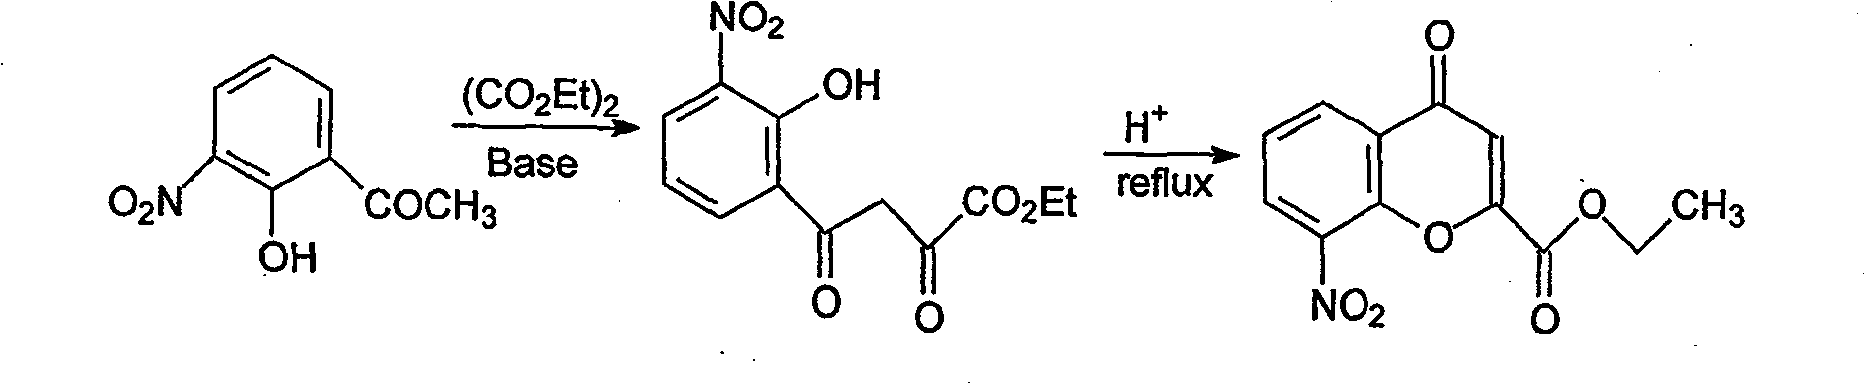 Method for synthesizing drug pranlukast from tetrahydrofuran path